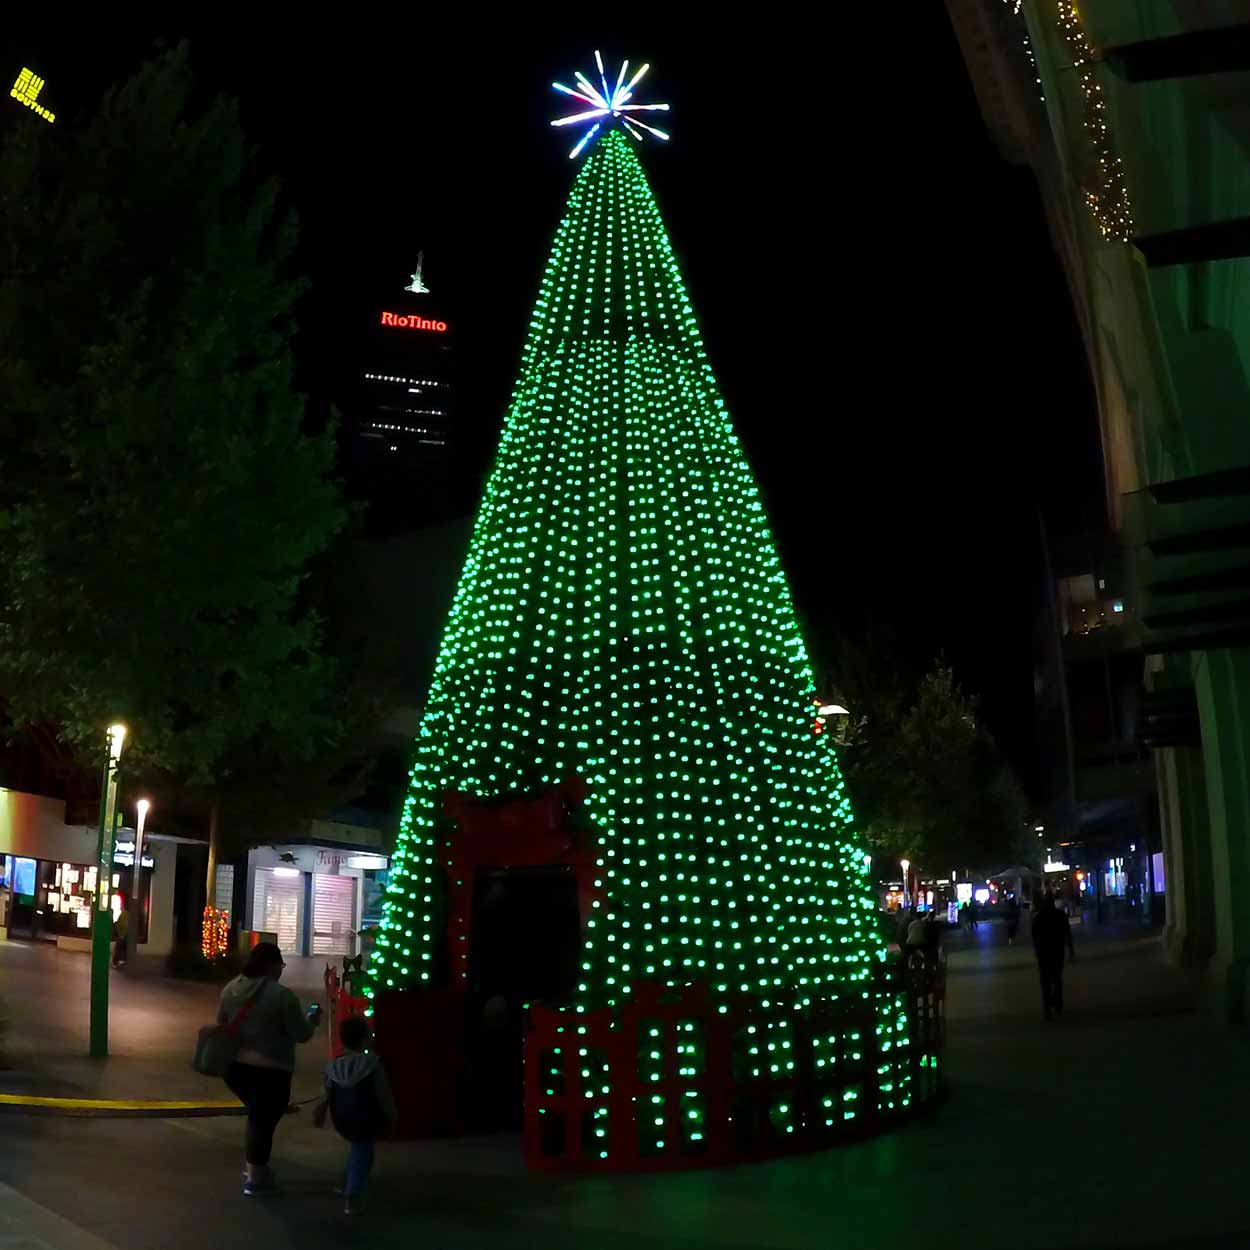 City of Perth Christmas Tree, Murray Street Mall, Perth, Western Australia